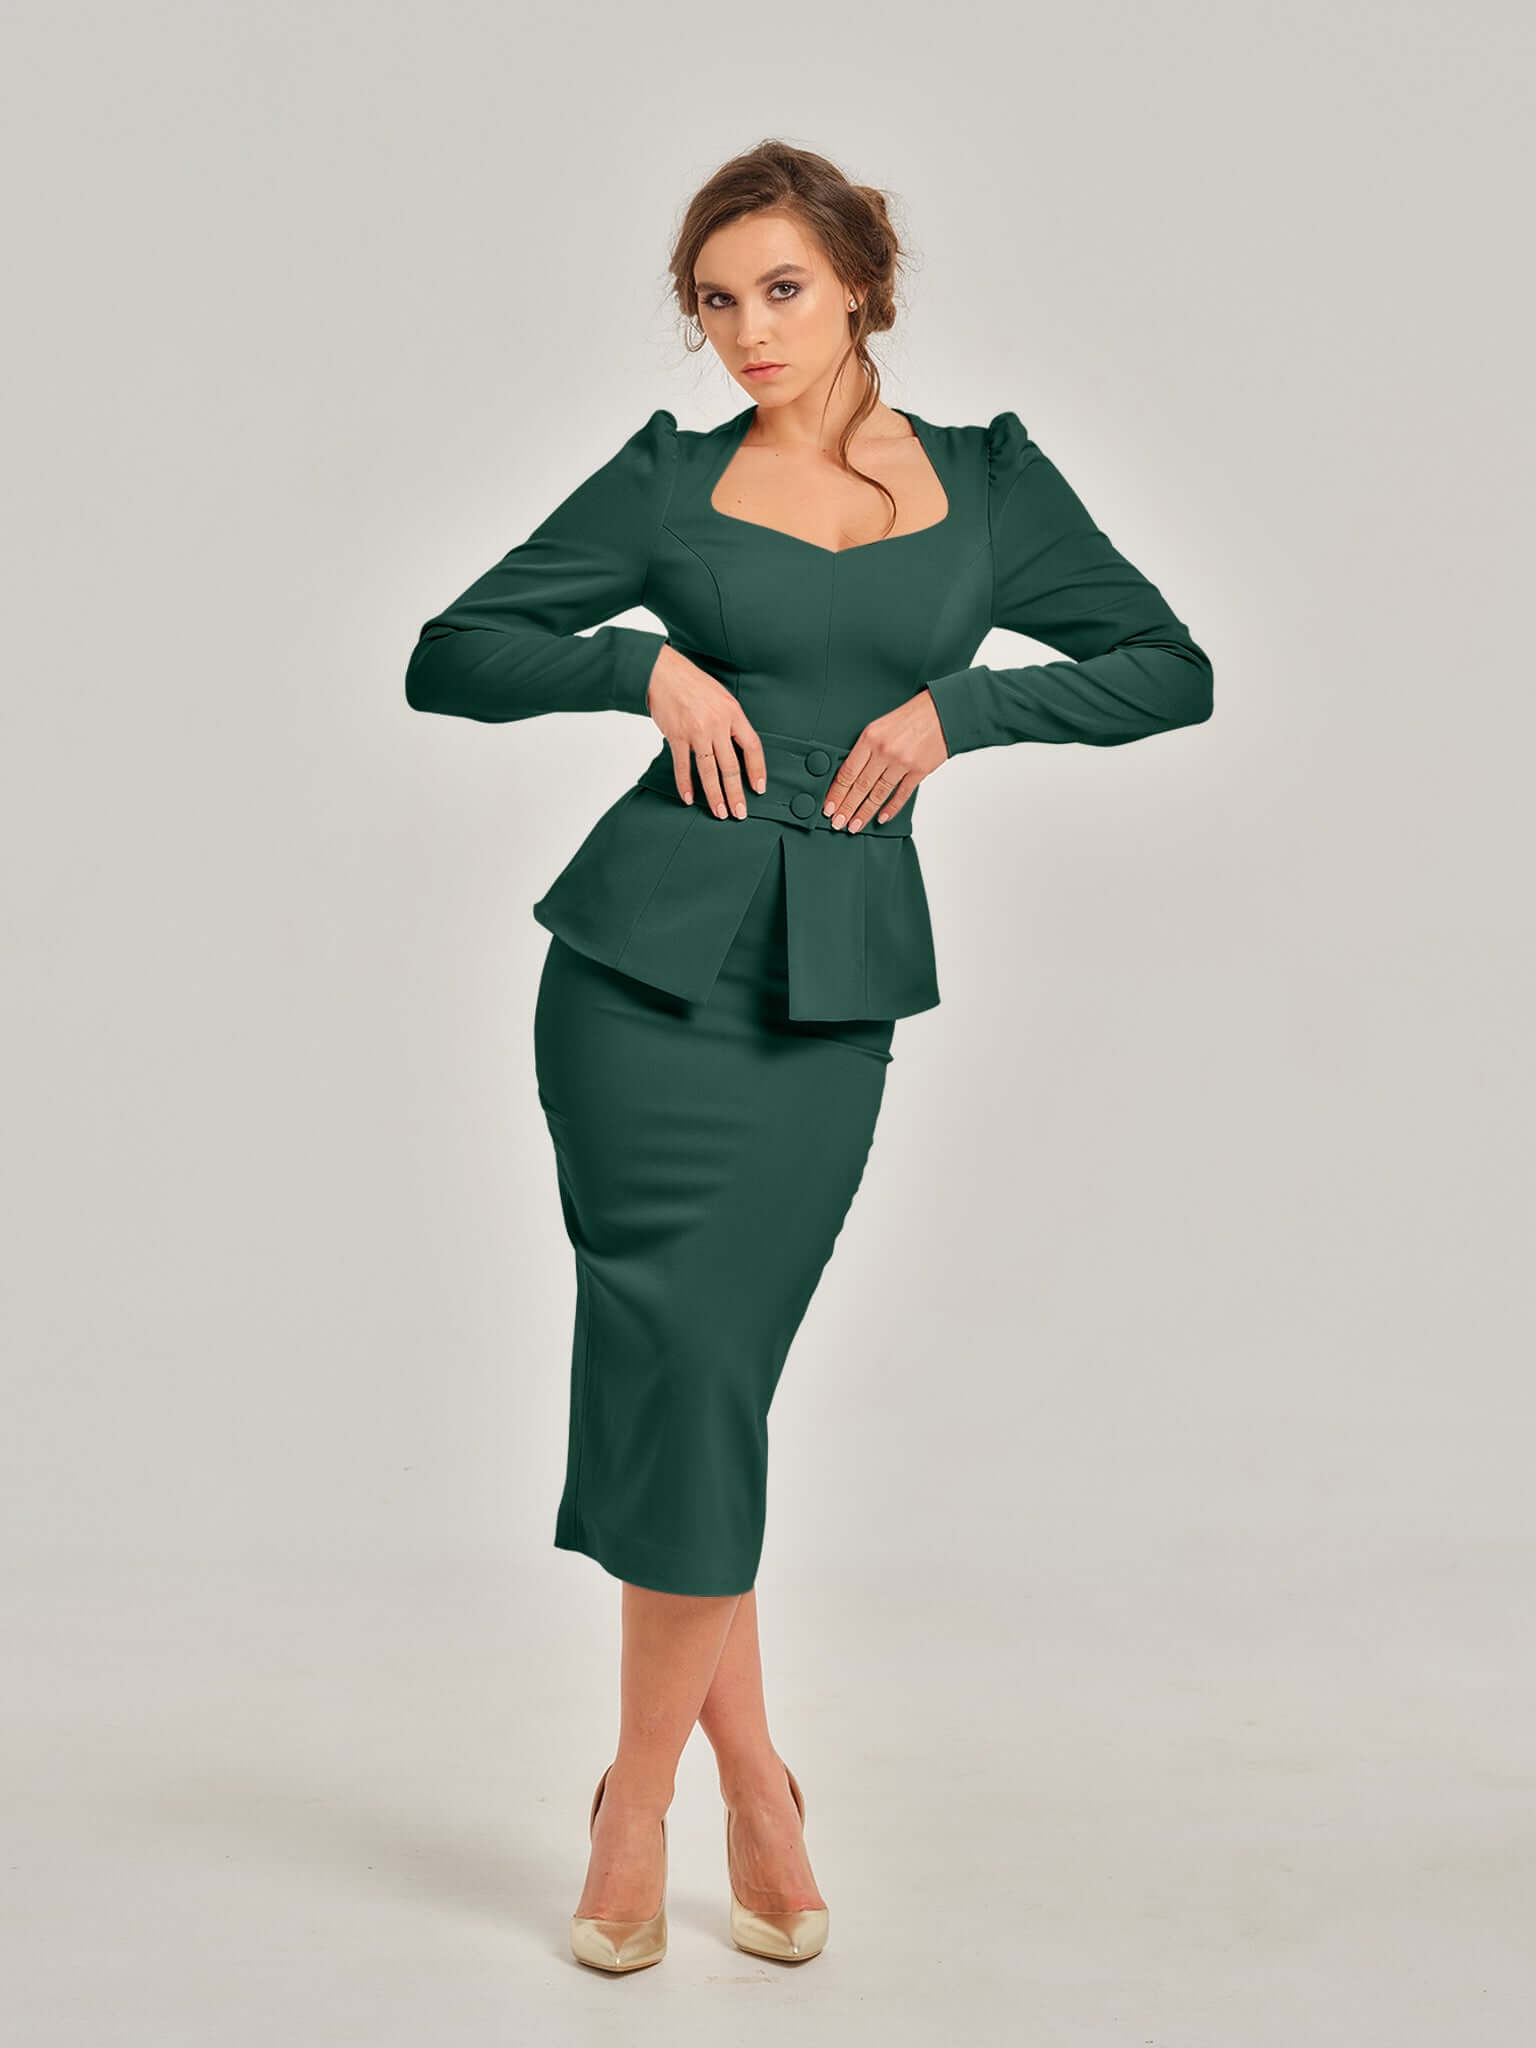 Emerald Dream High-Waist Pencil Midi Skirt by Tia Dorraine Women's Luxury Fashion Designer Clothing Brand